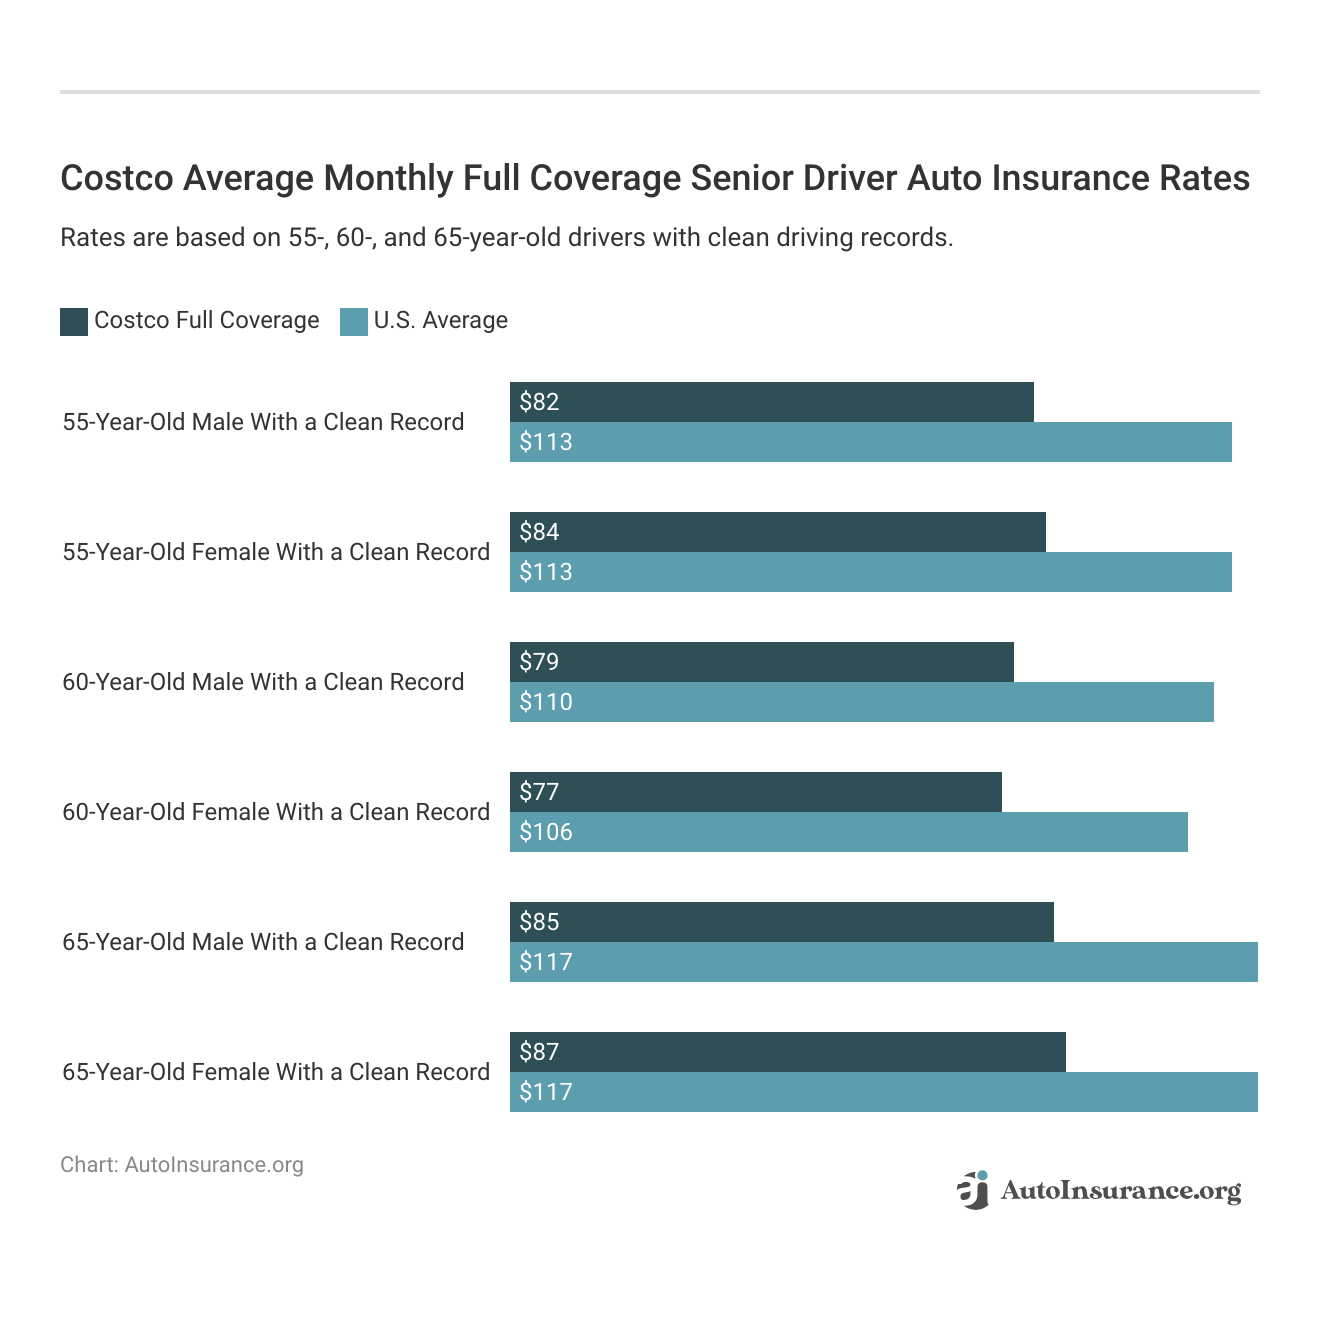 <h3>Costco Average Monthly Full Coverage Senior Driver Auto Insurance Rates</h3>